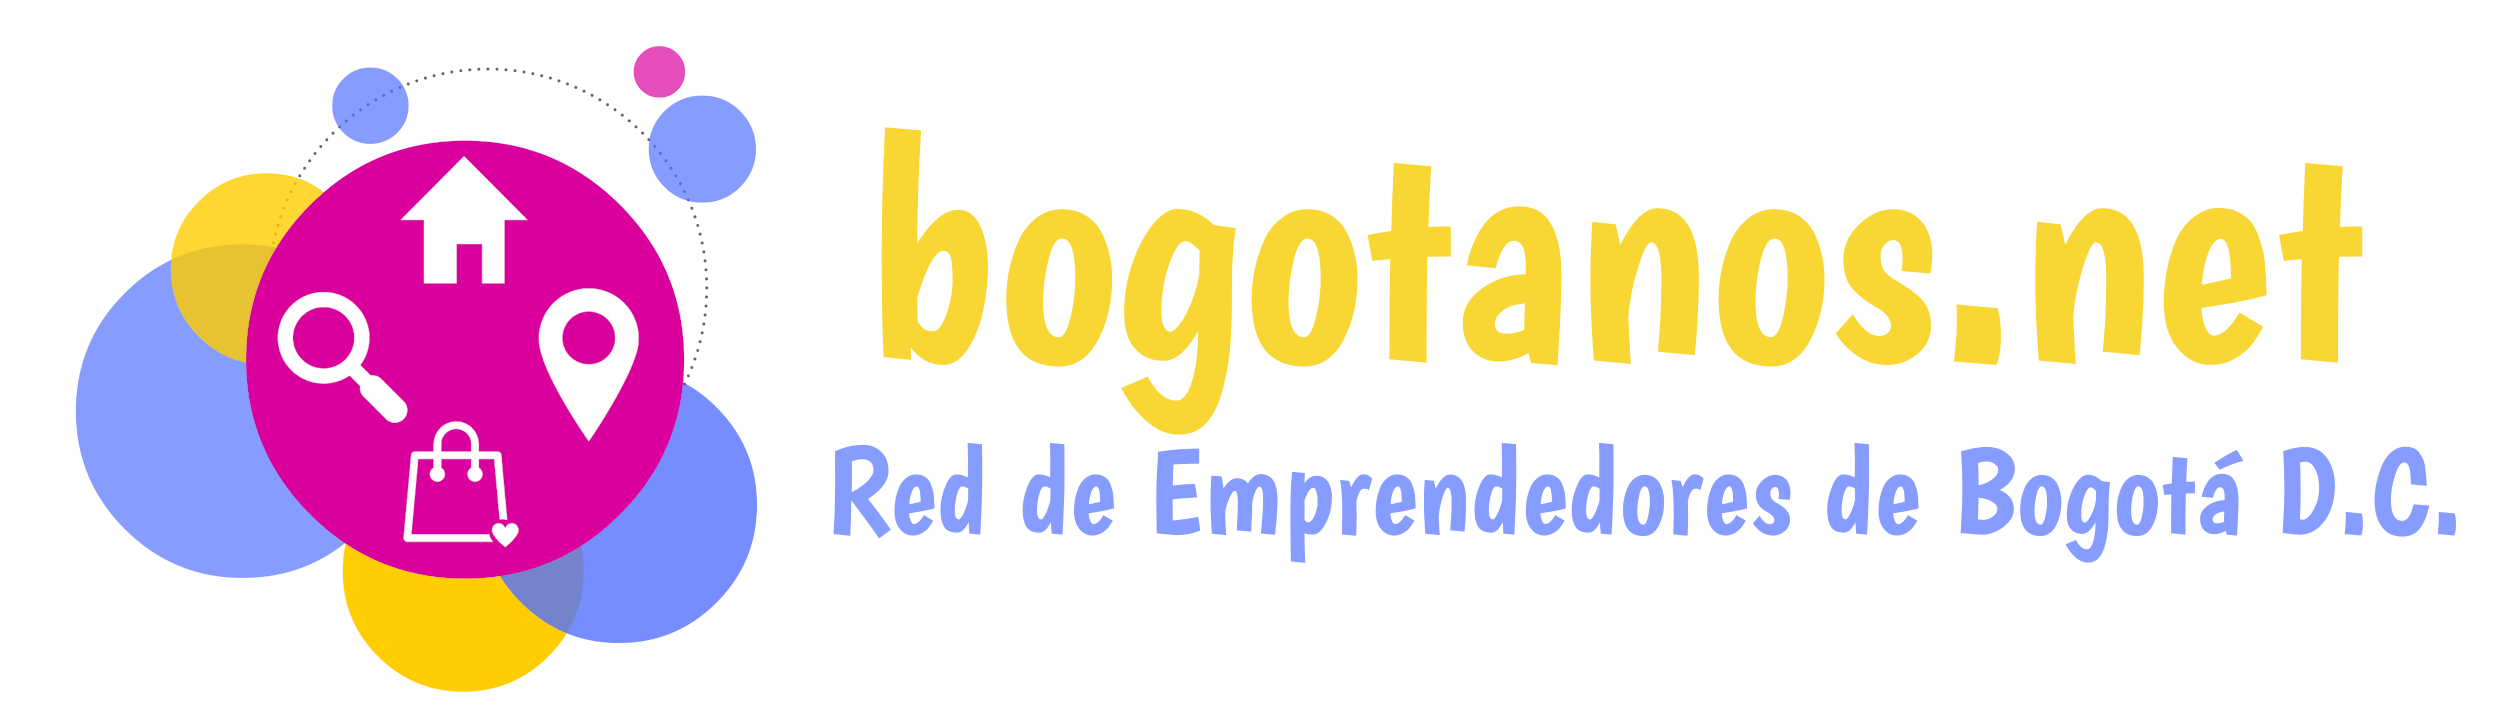 Red de Emprendedores de Bogotá D.C.